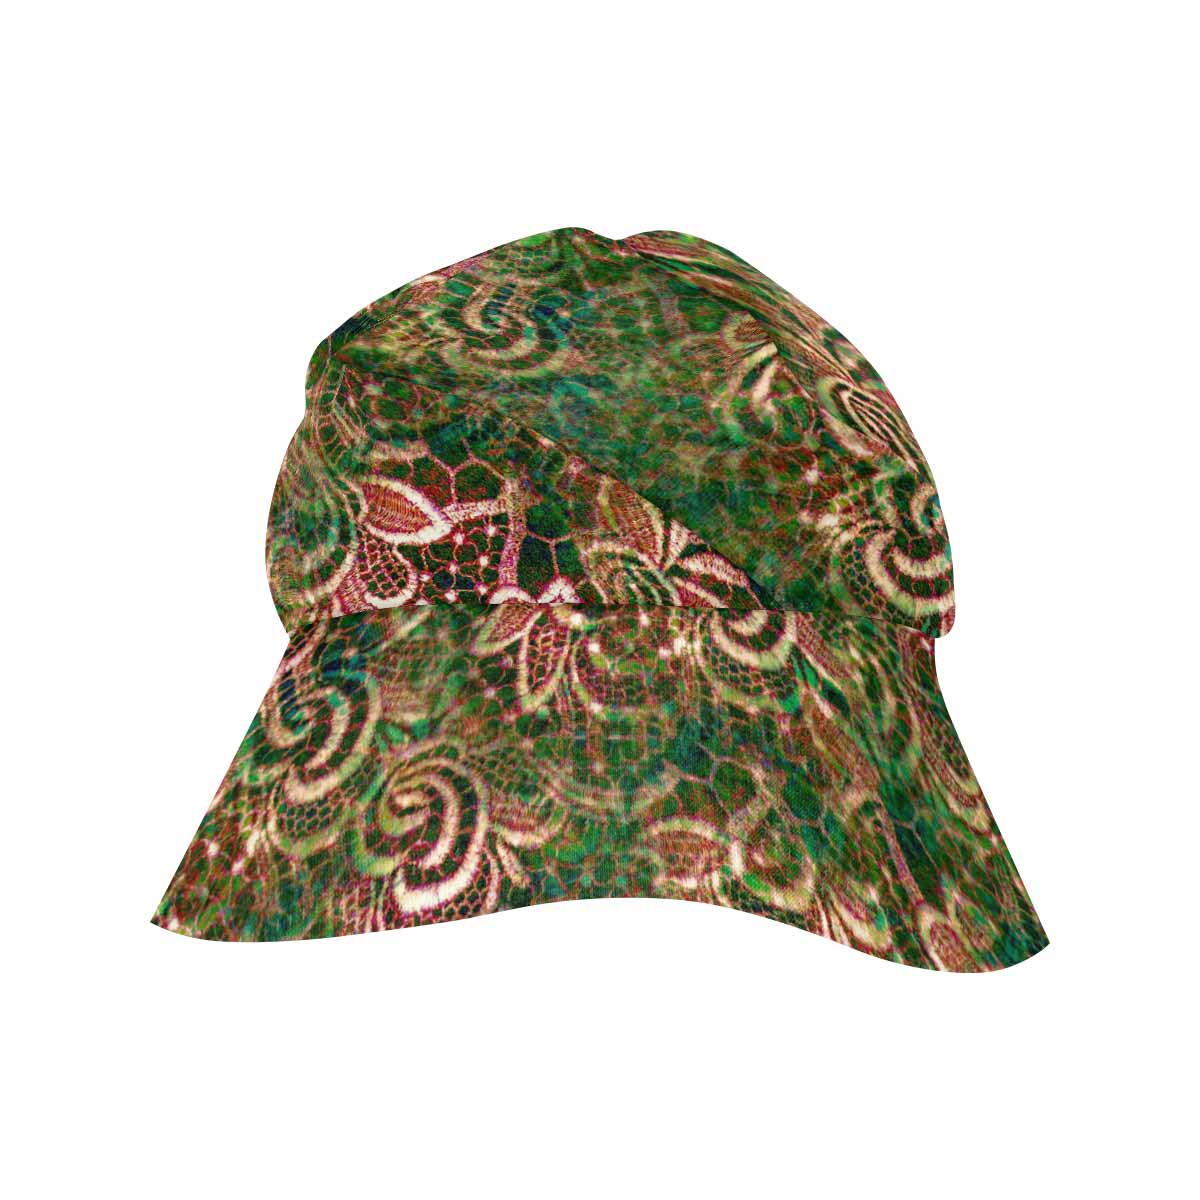 Victorian lace print, wide brim sunvisor Hat, outdoors hat, design 34